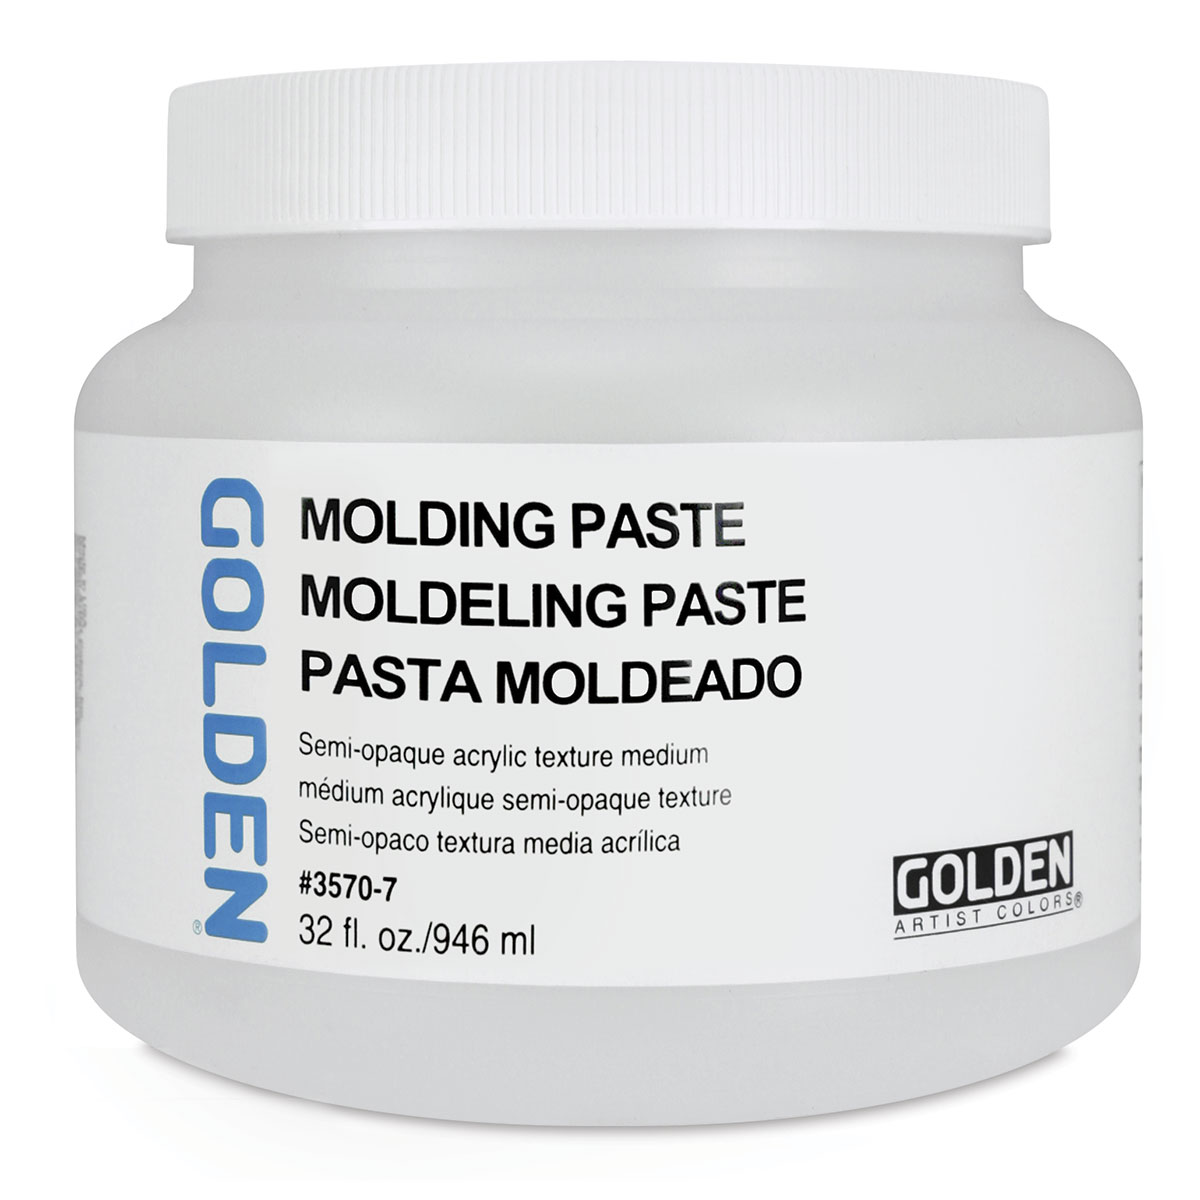 Hard Molding Paste Golden - 16 Oz